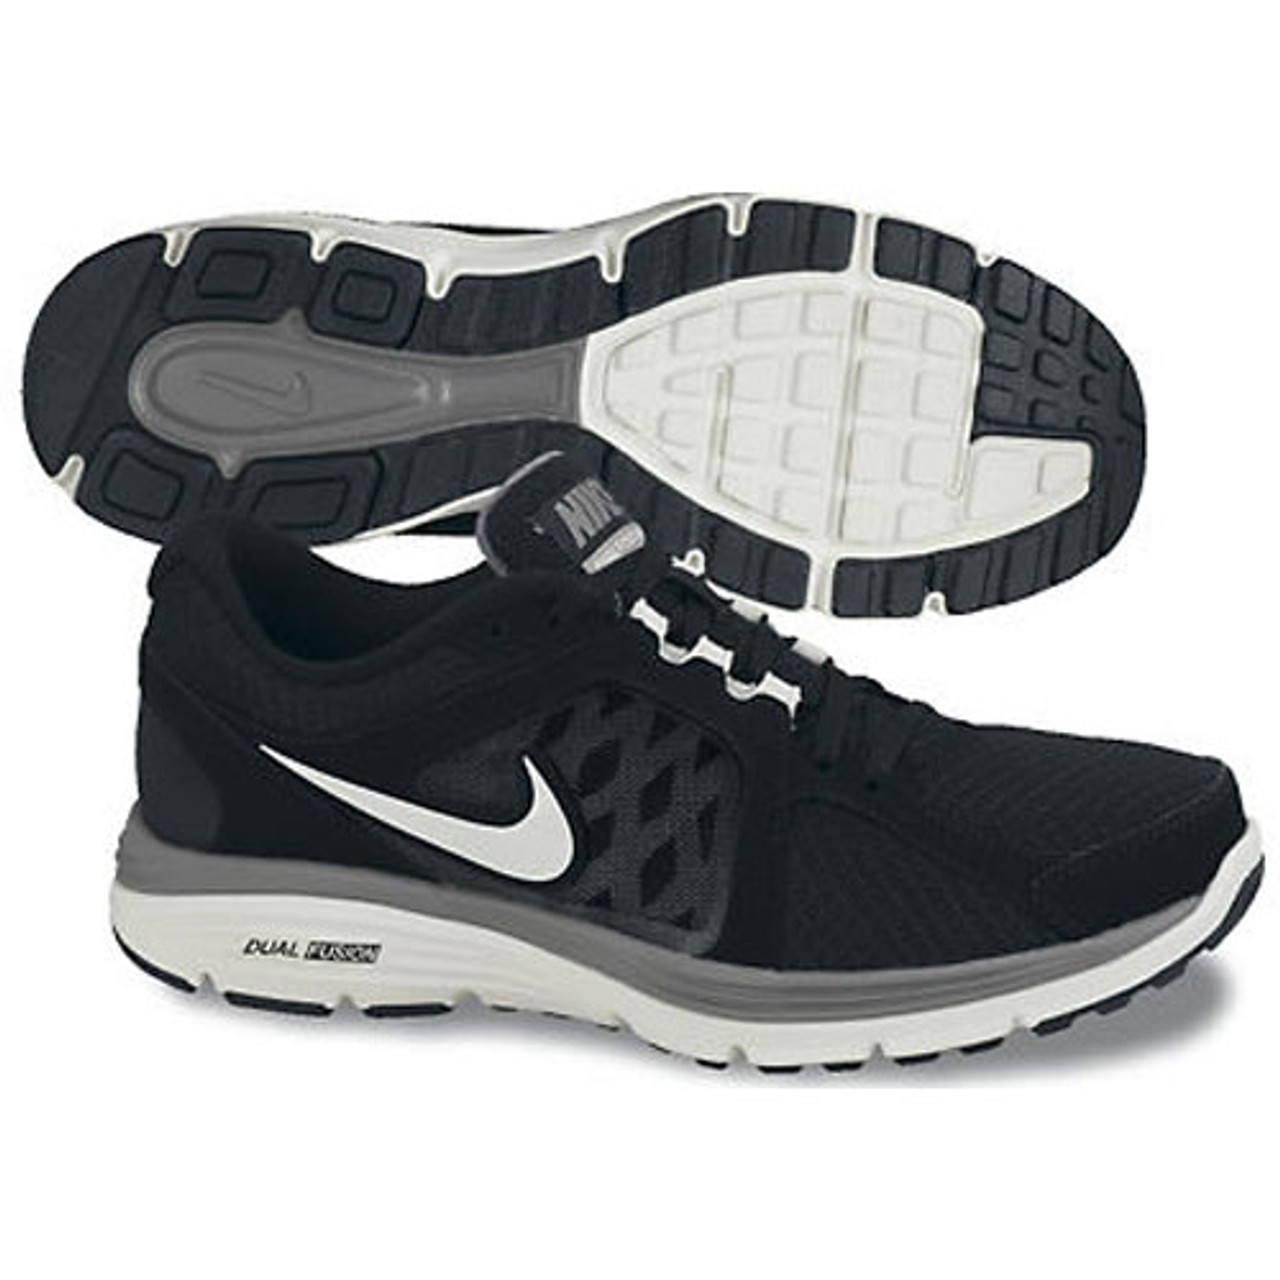 Nike Dual Fusion Run | Discount Nike Men's Athletic & More - Shoolu.com Shoolu.com